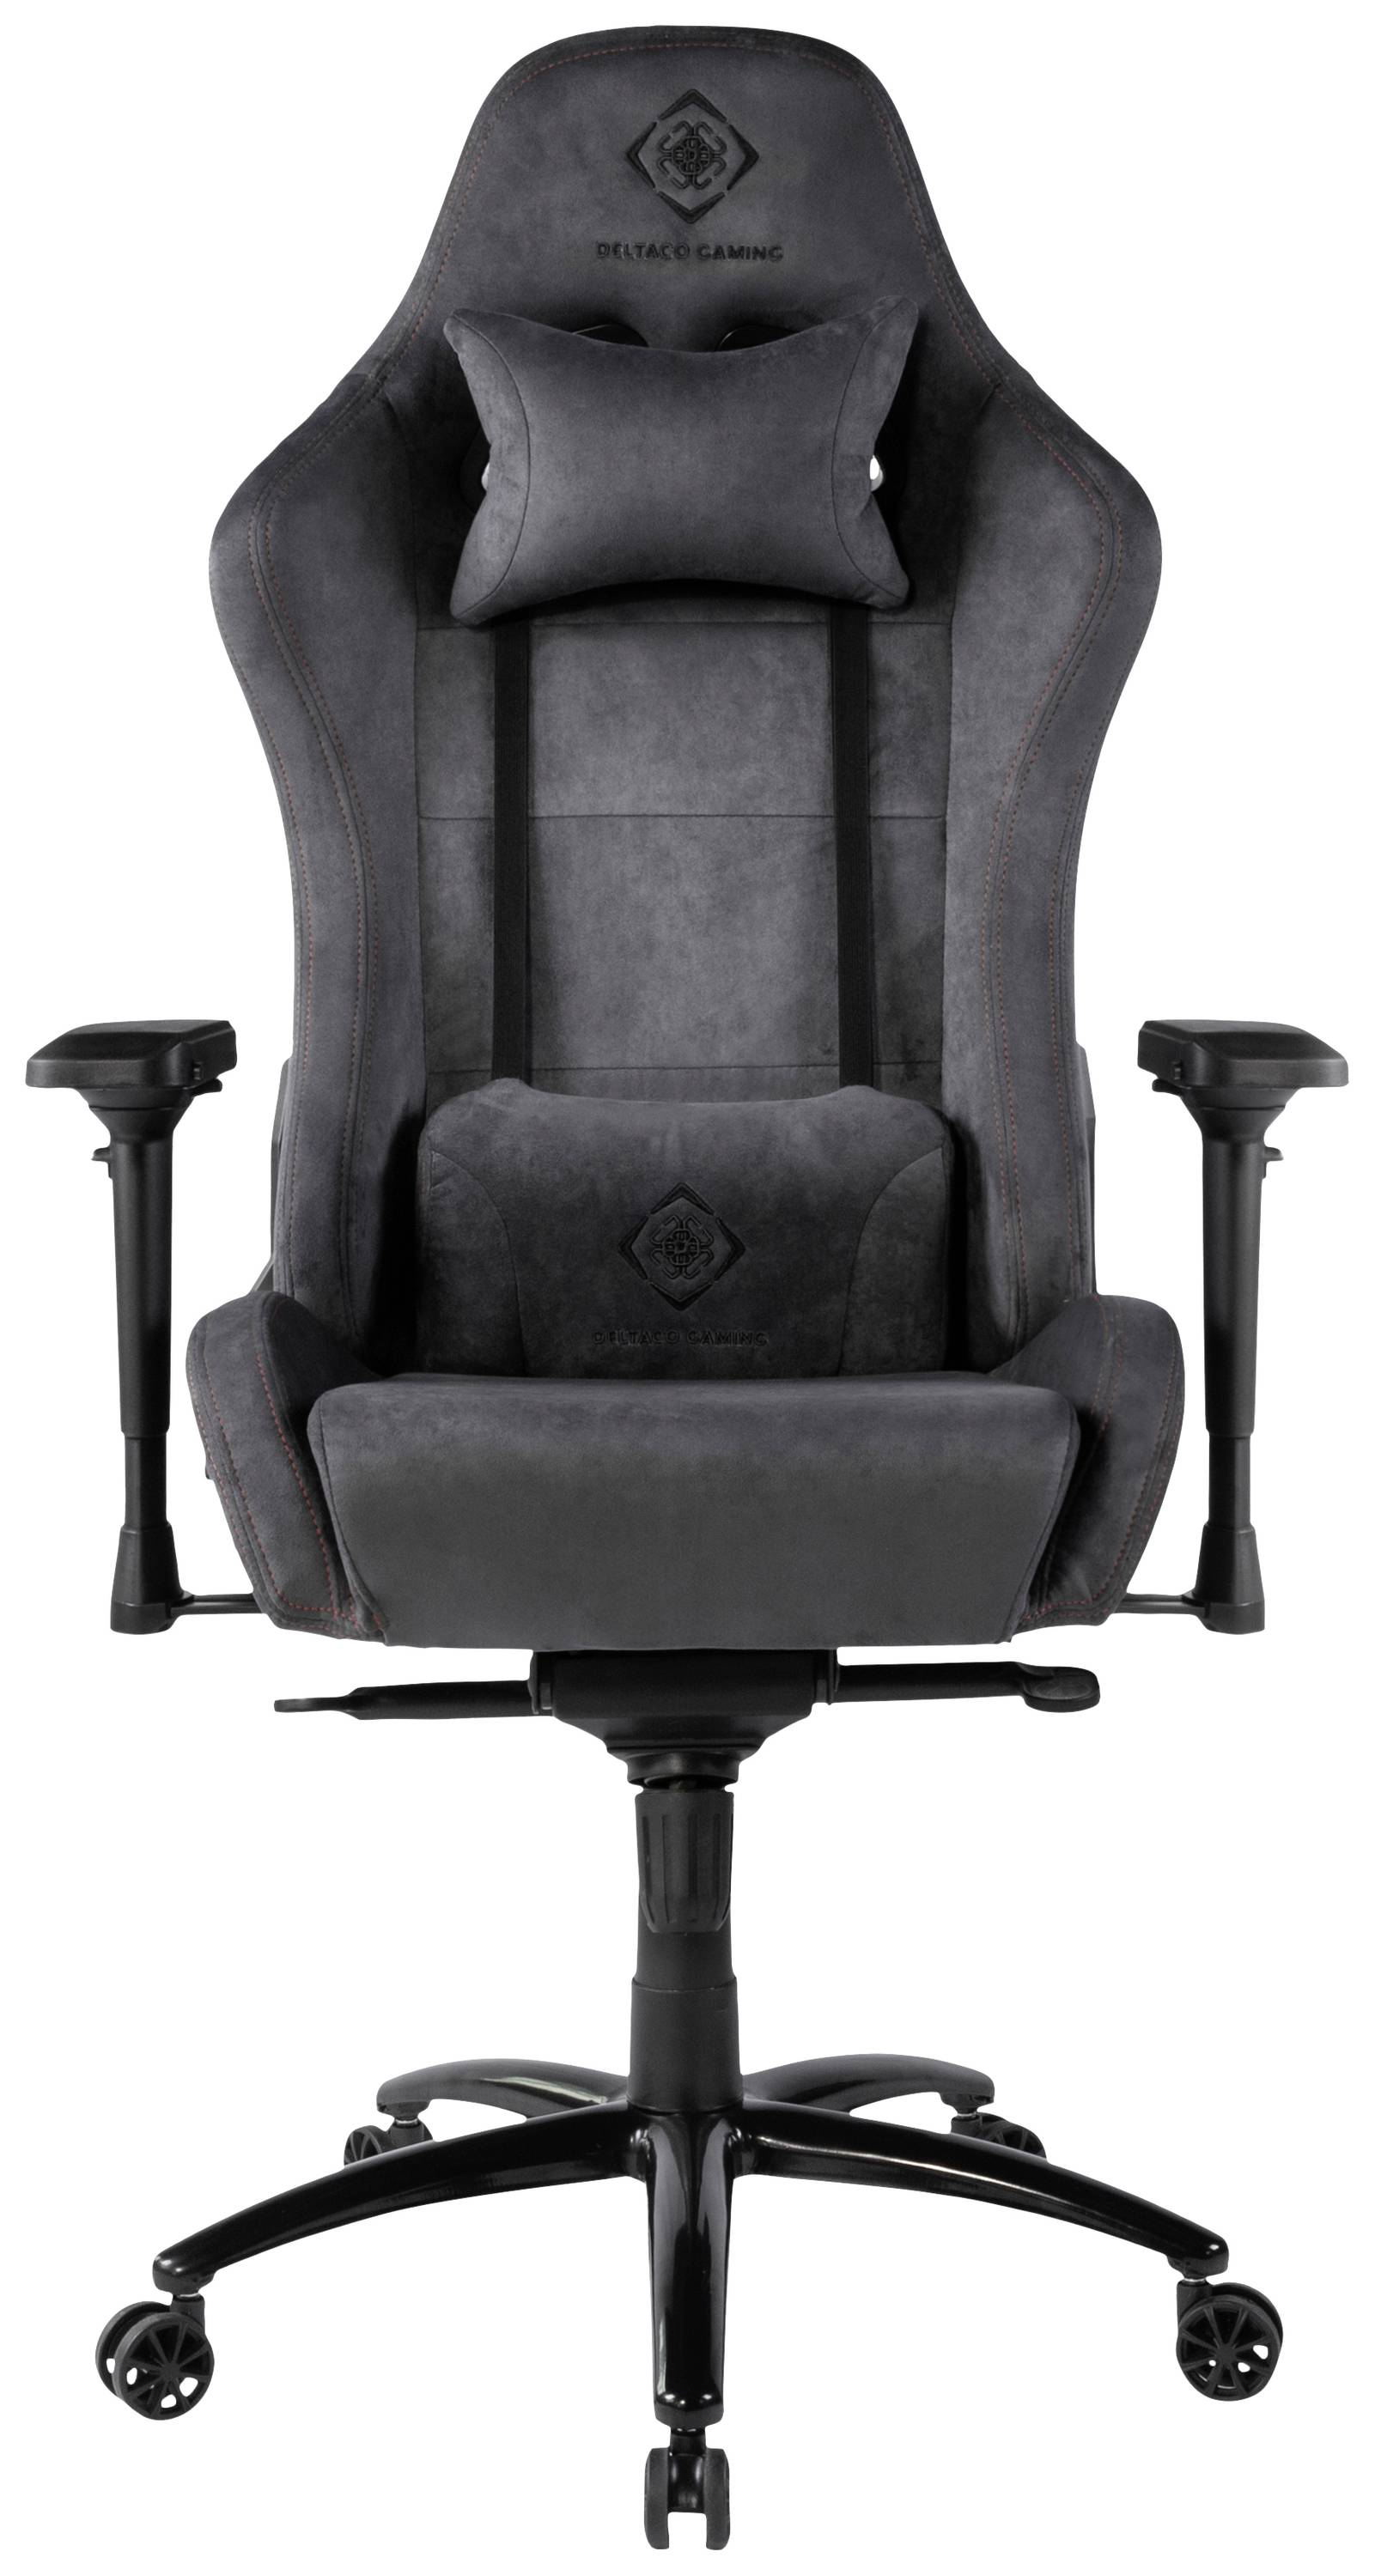 Buy DELTACO GAMING DC440D Gaming chair Dark grey | Conrad Electronic